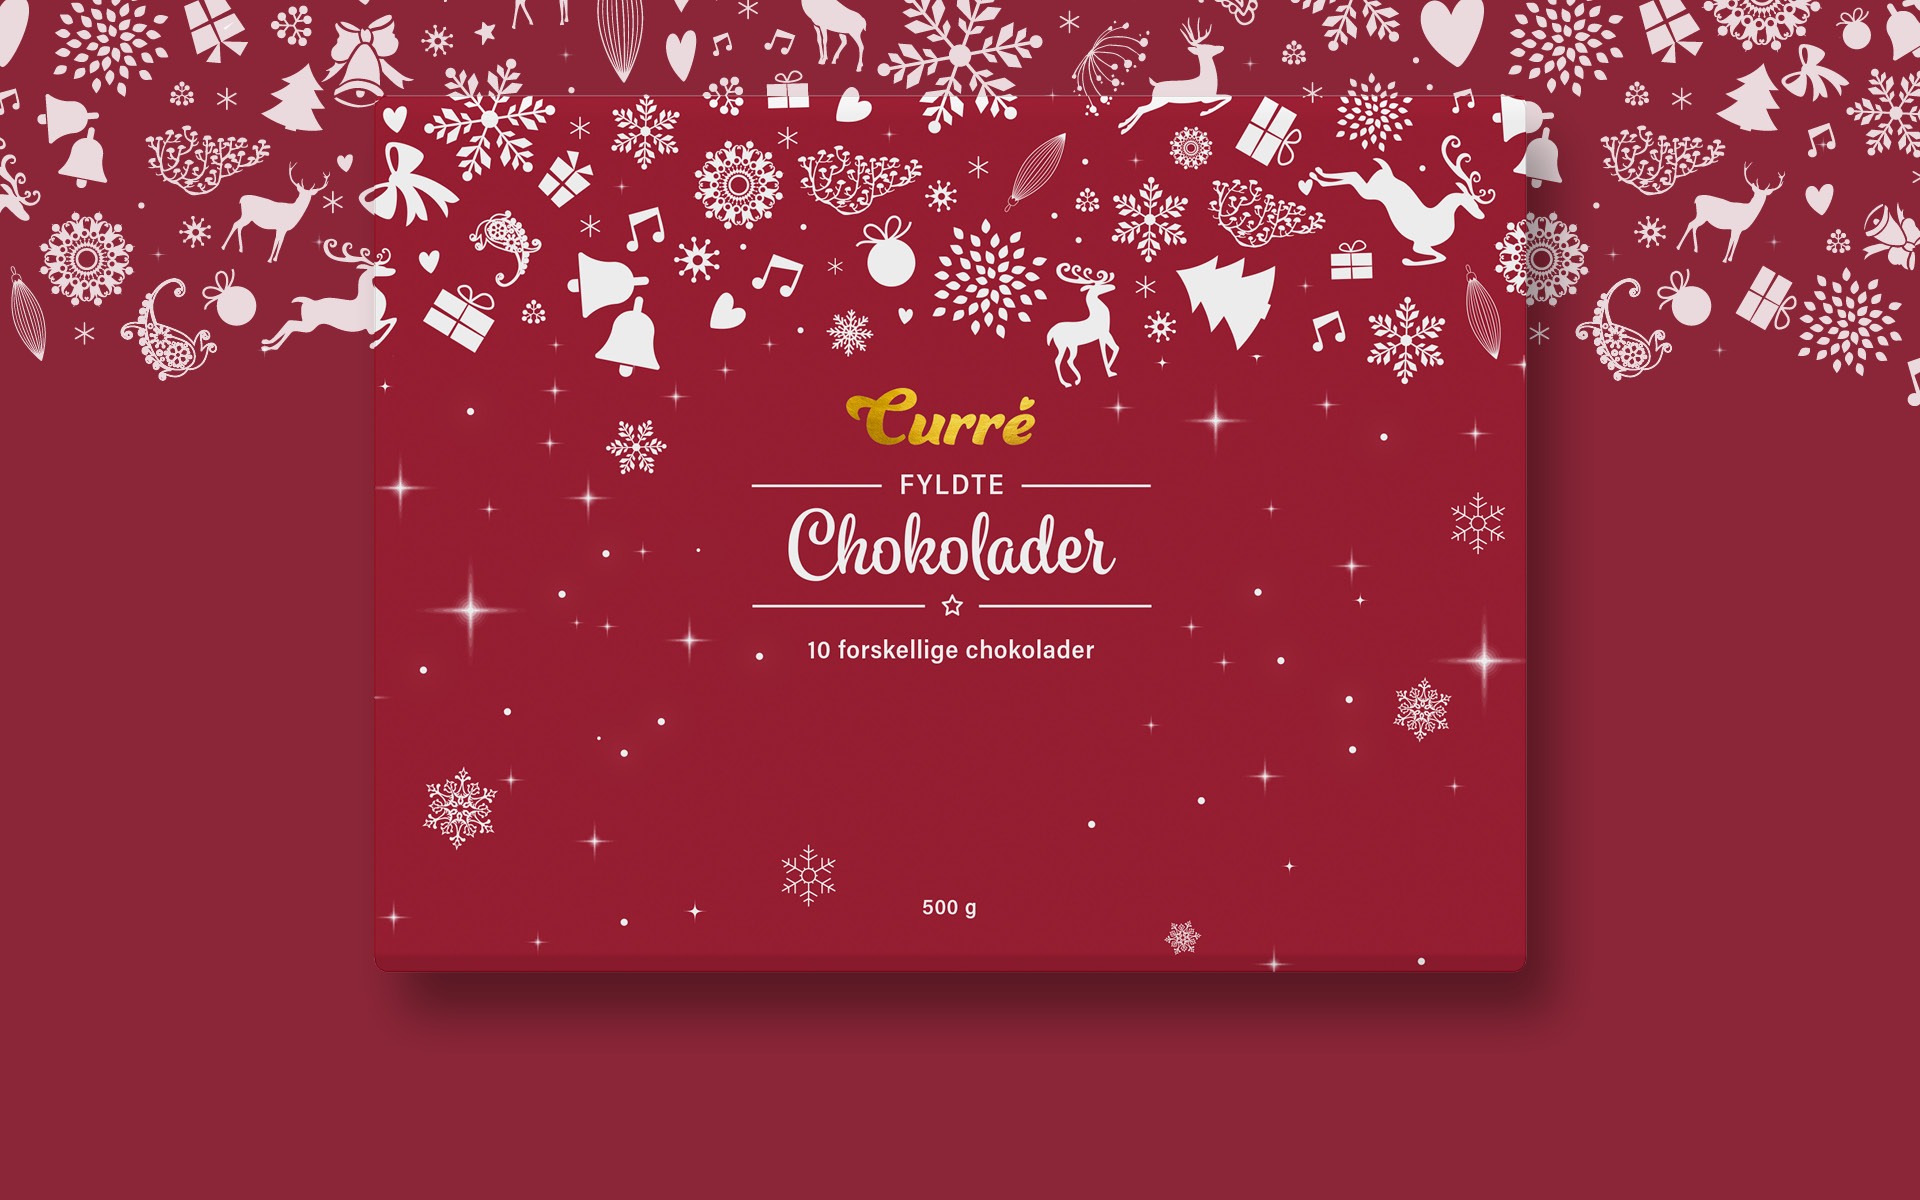 emballagedesign SallingGroup Curre fyldtechokolade